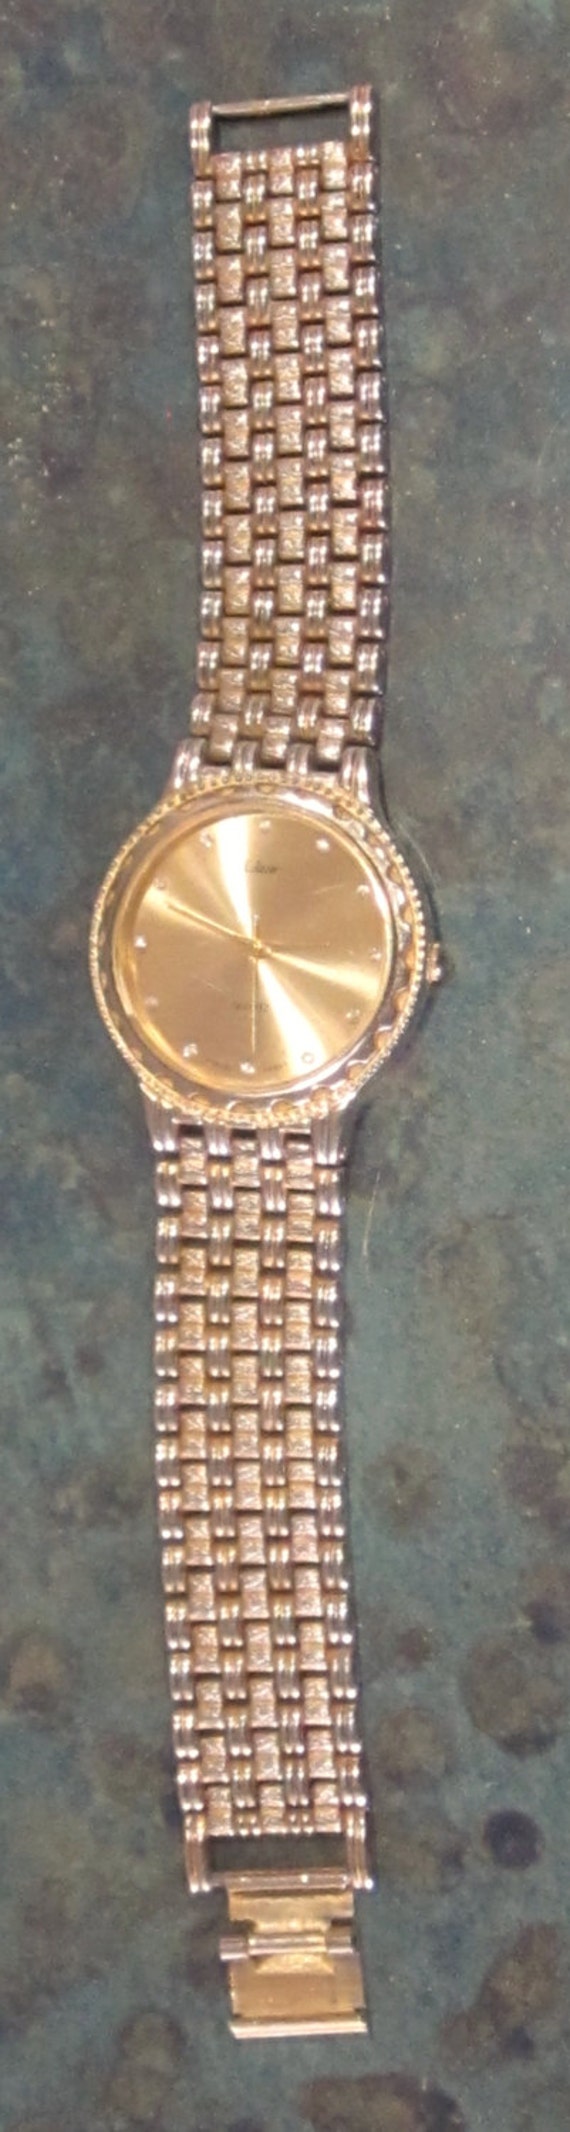 Vintage Collezio Watch 1970 Era